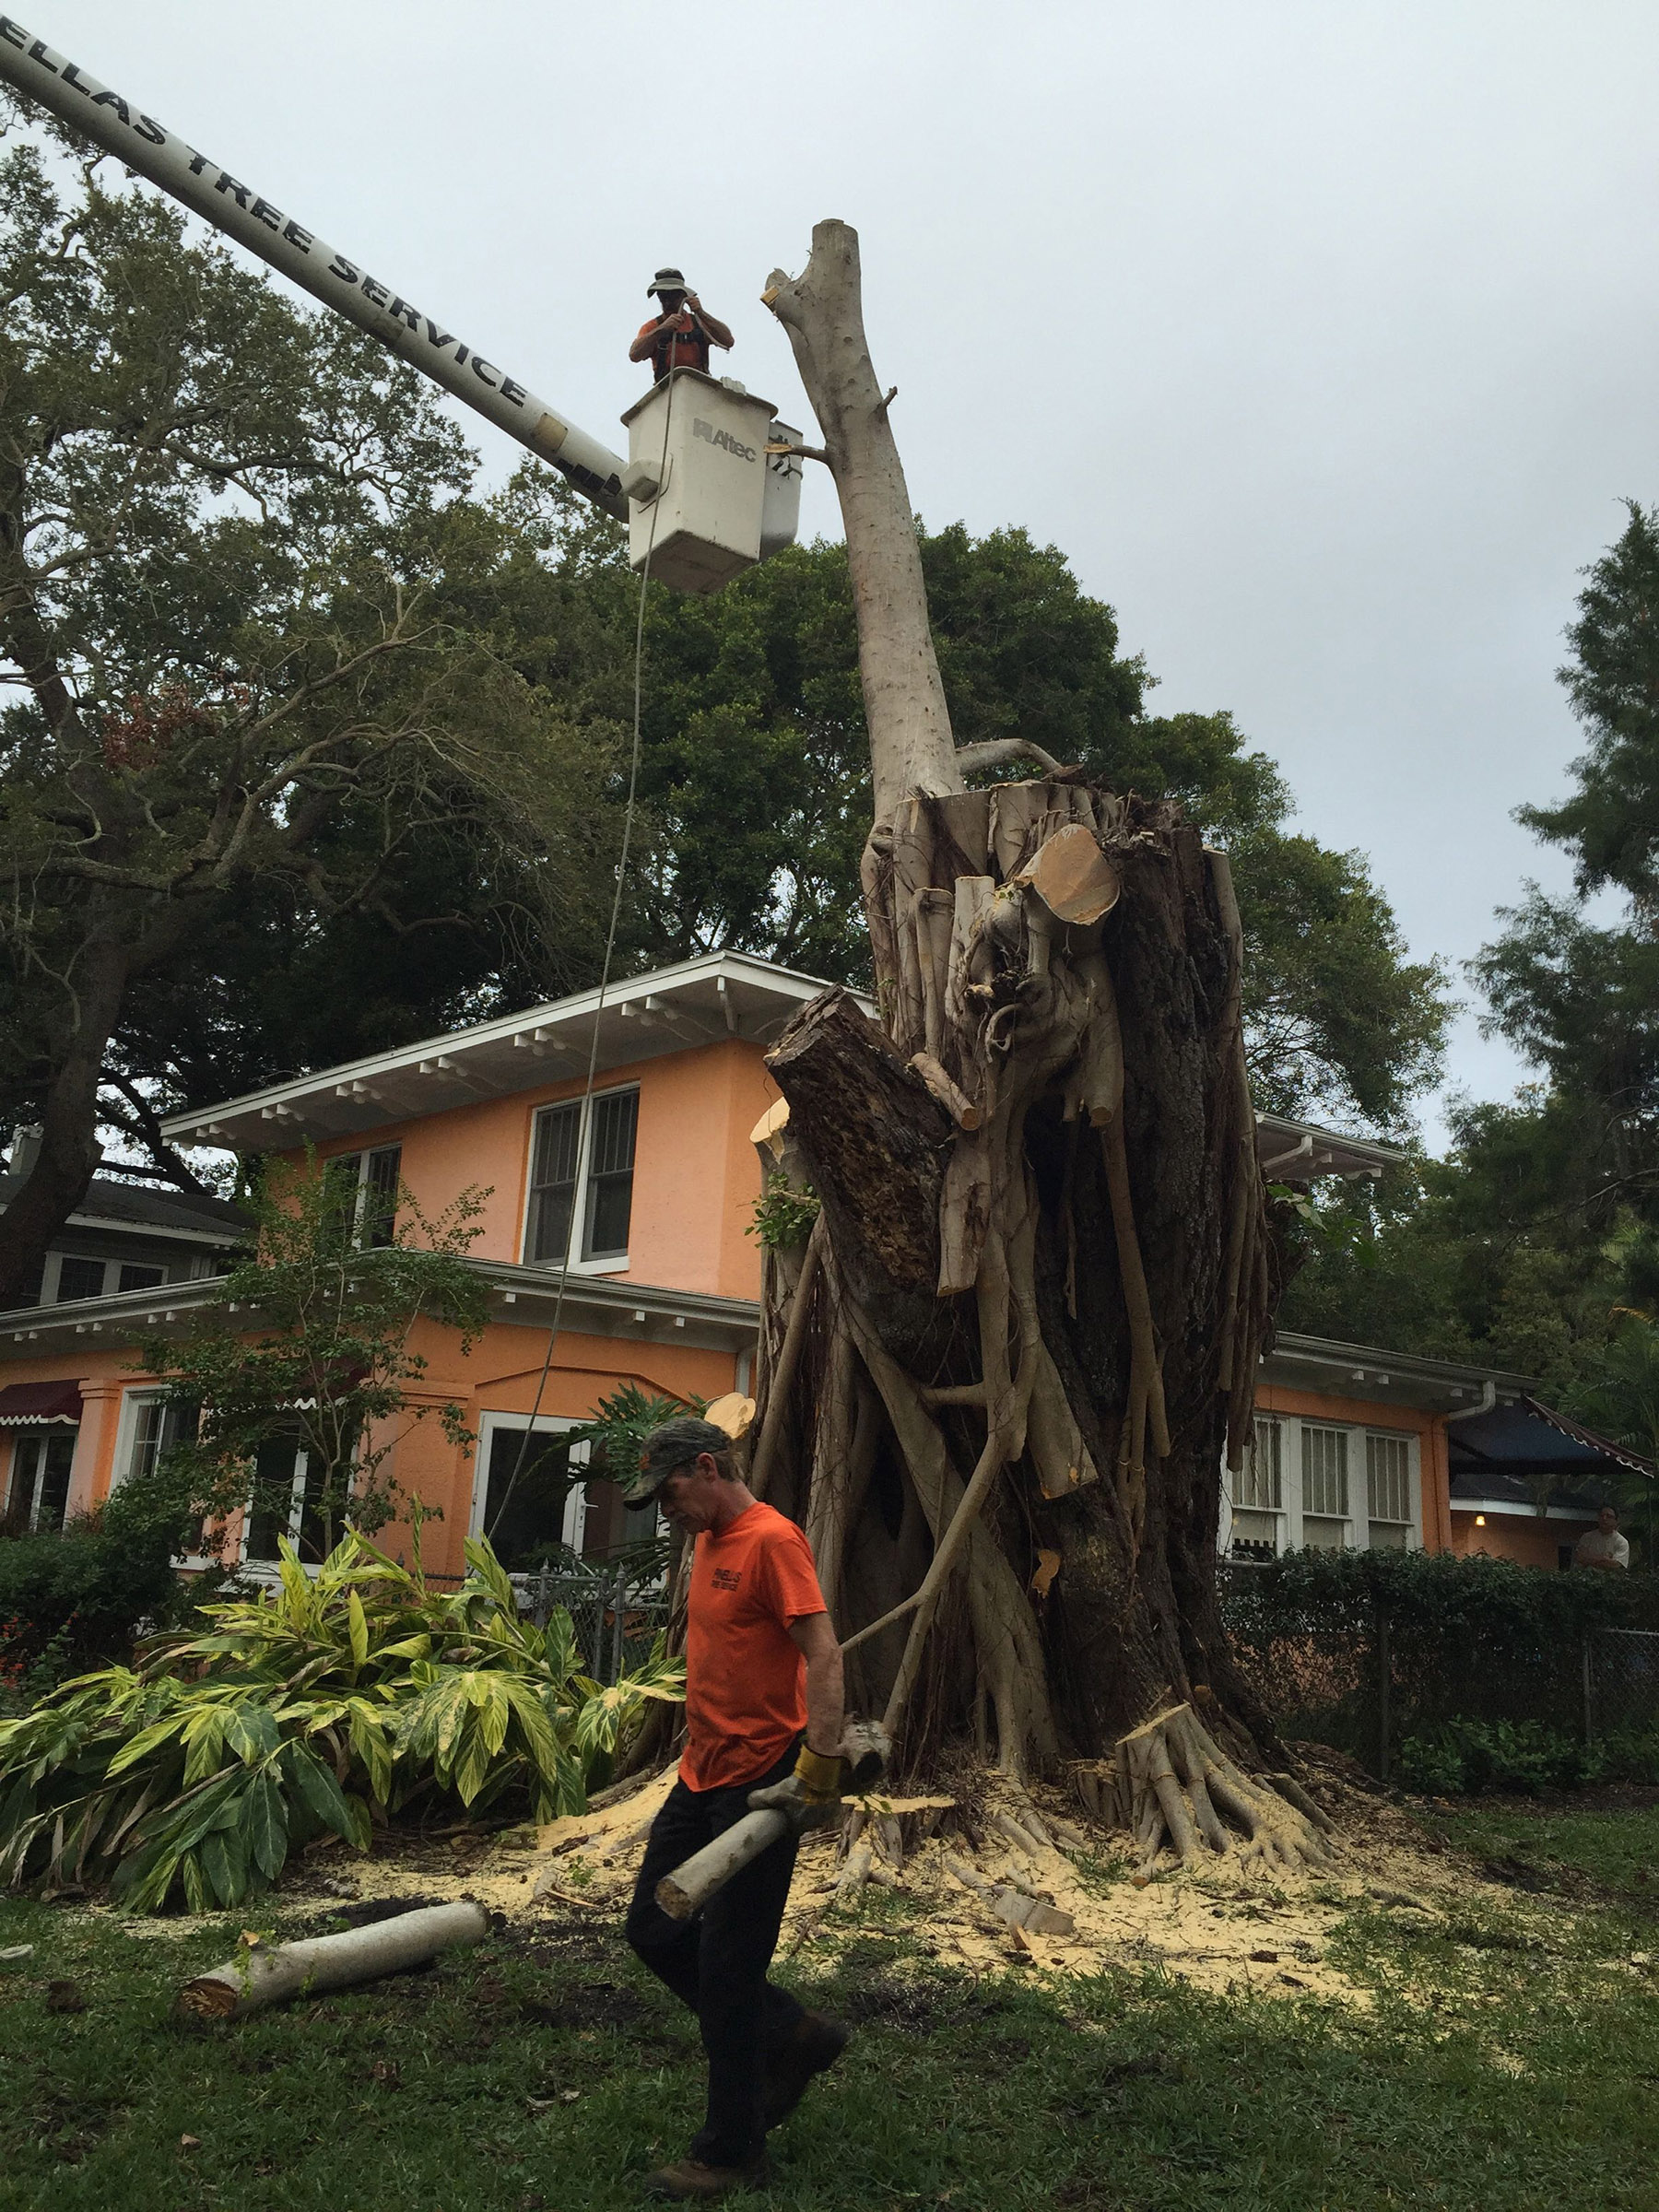 Pinellas Tree Service Tree Removal